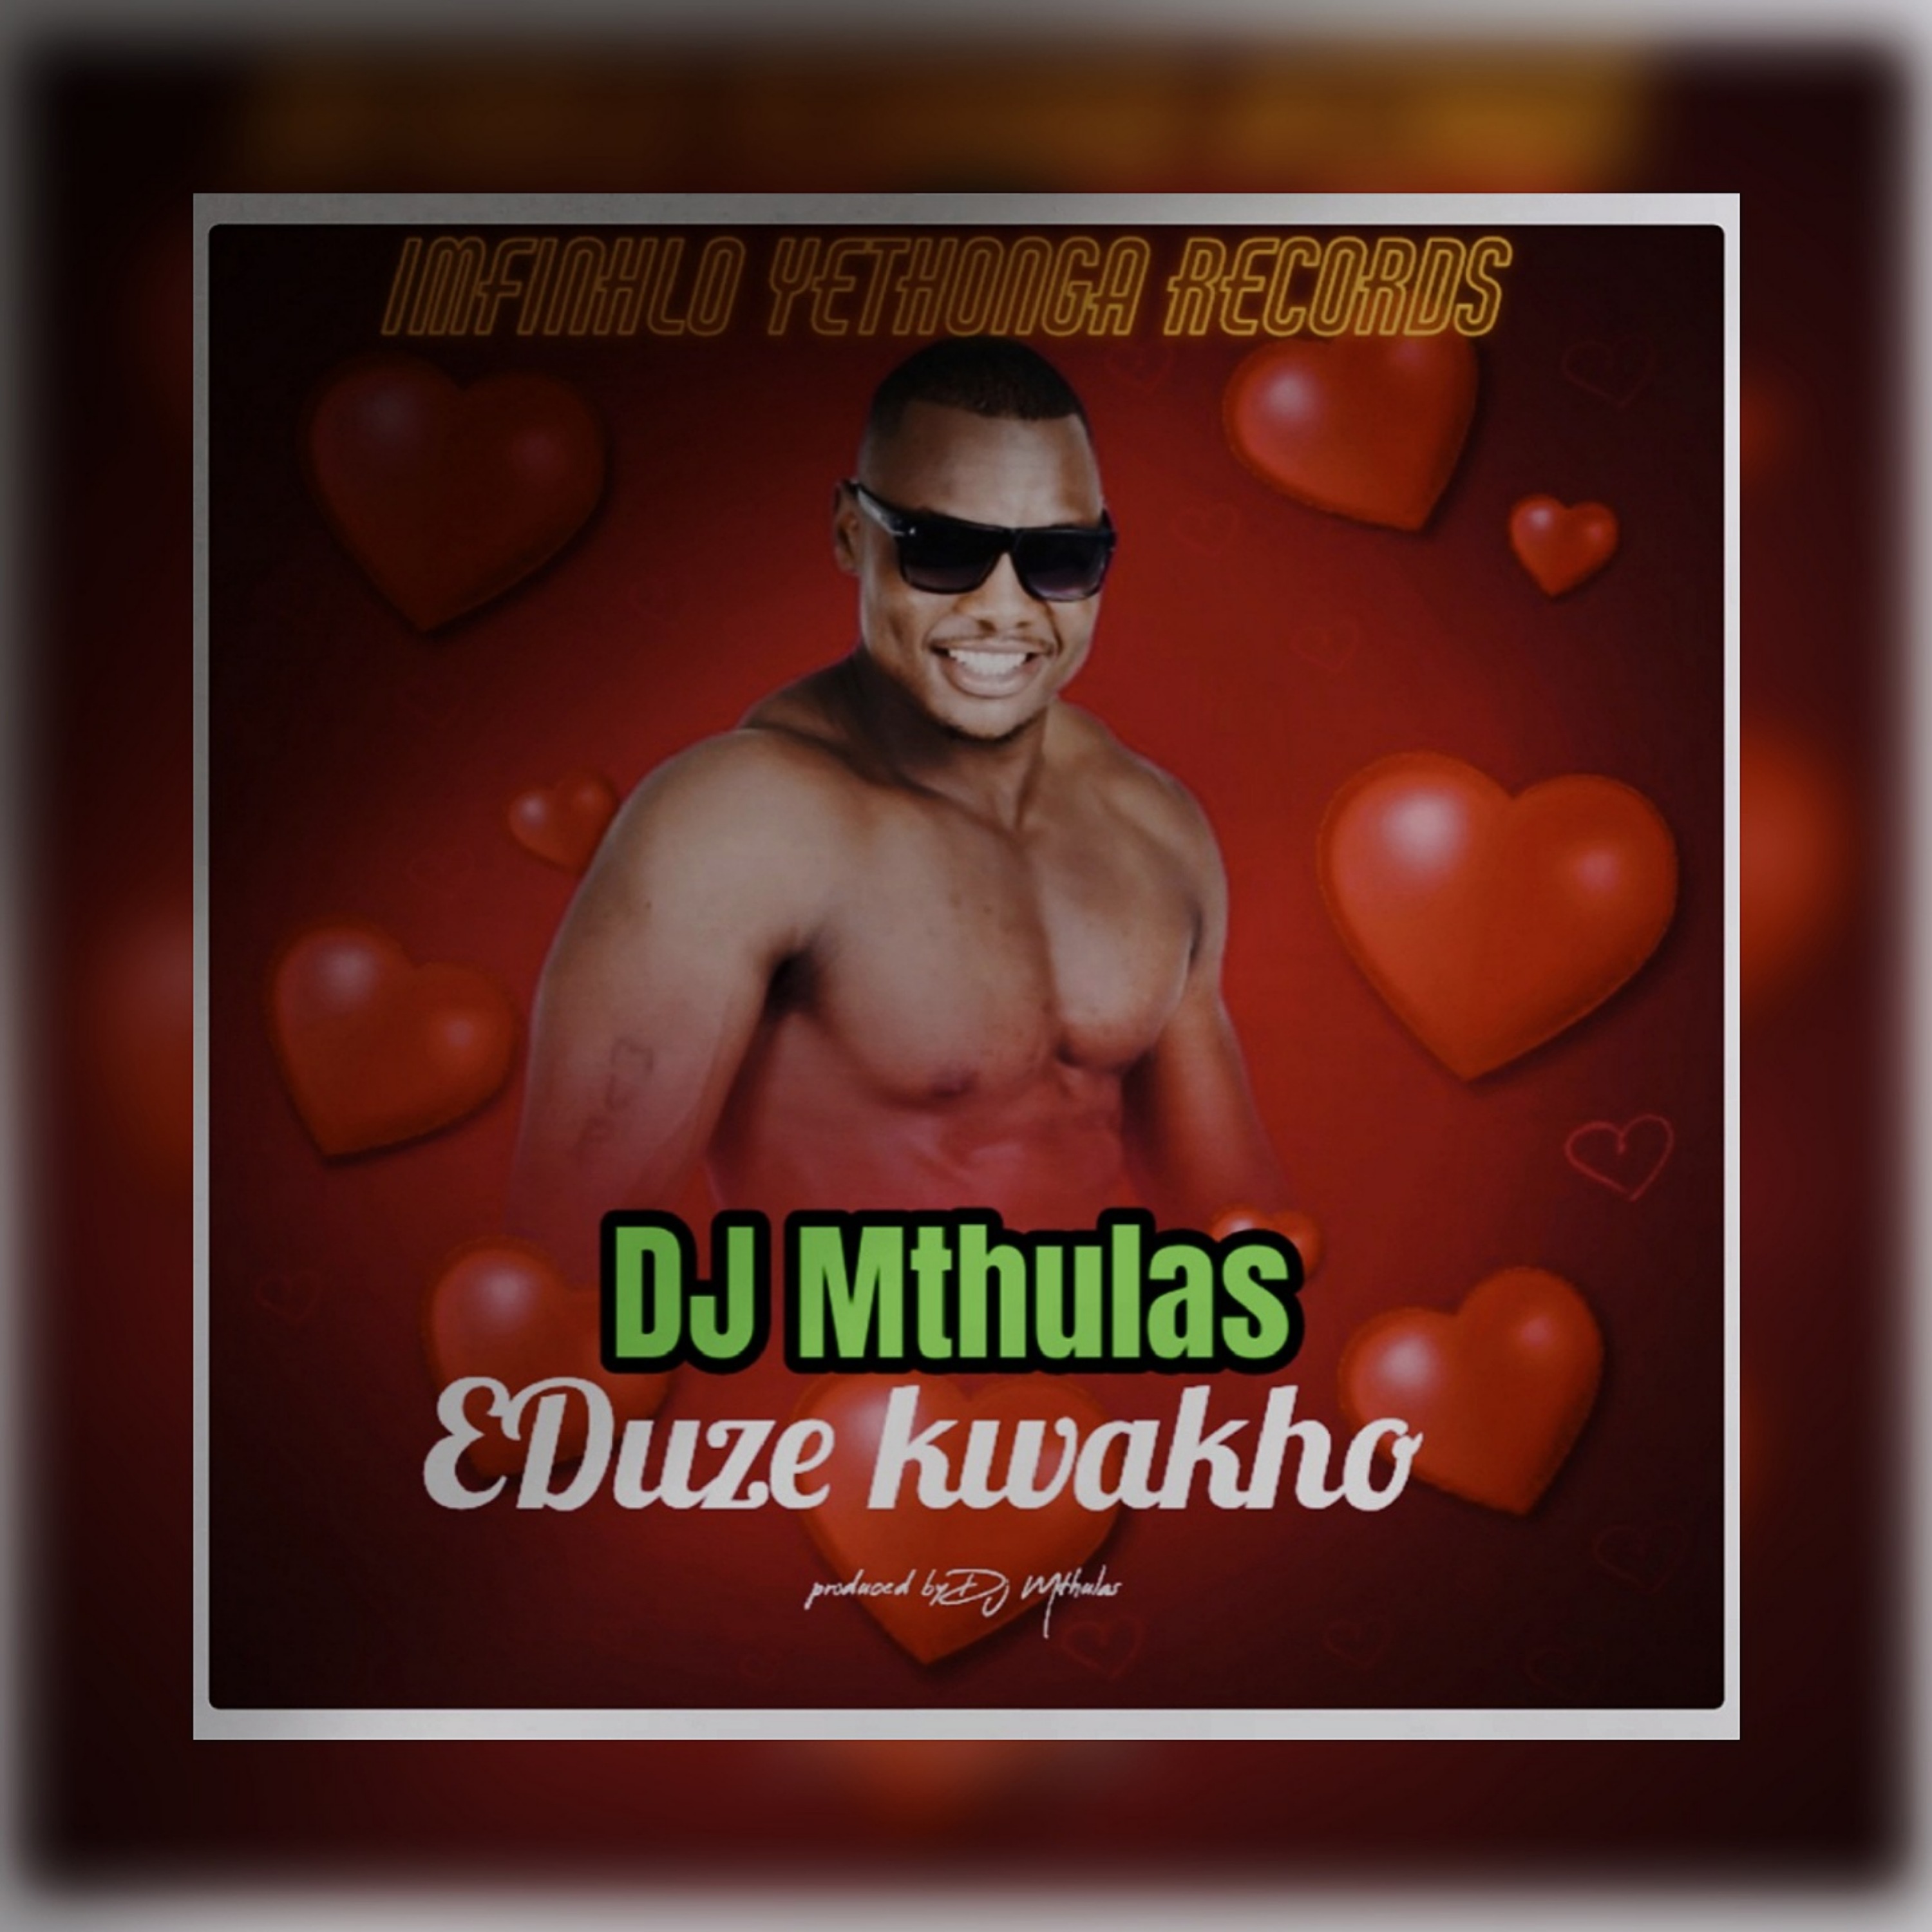 EDuze Kwakho - DJ Mthulas